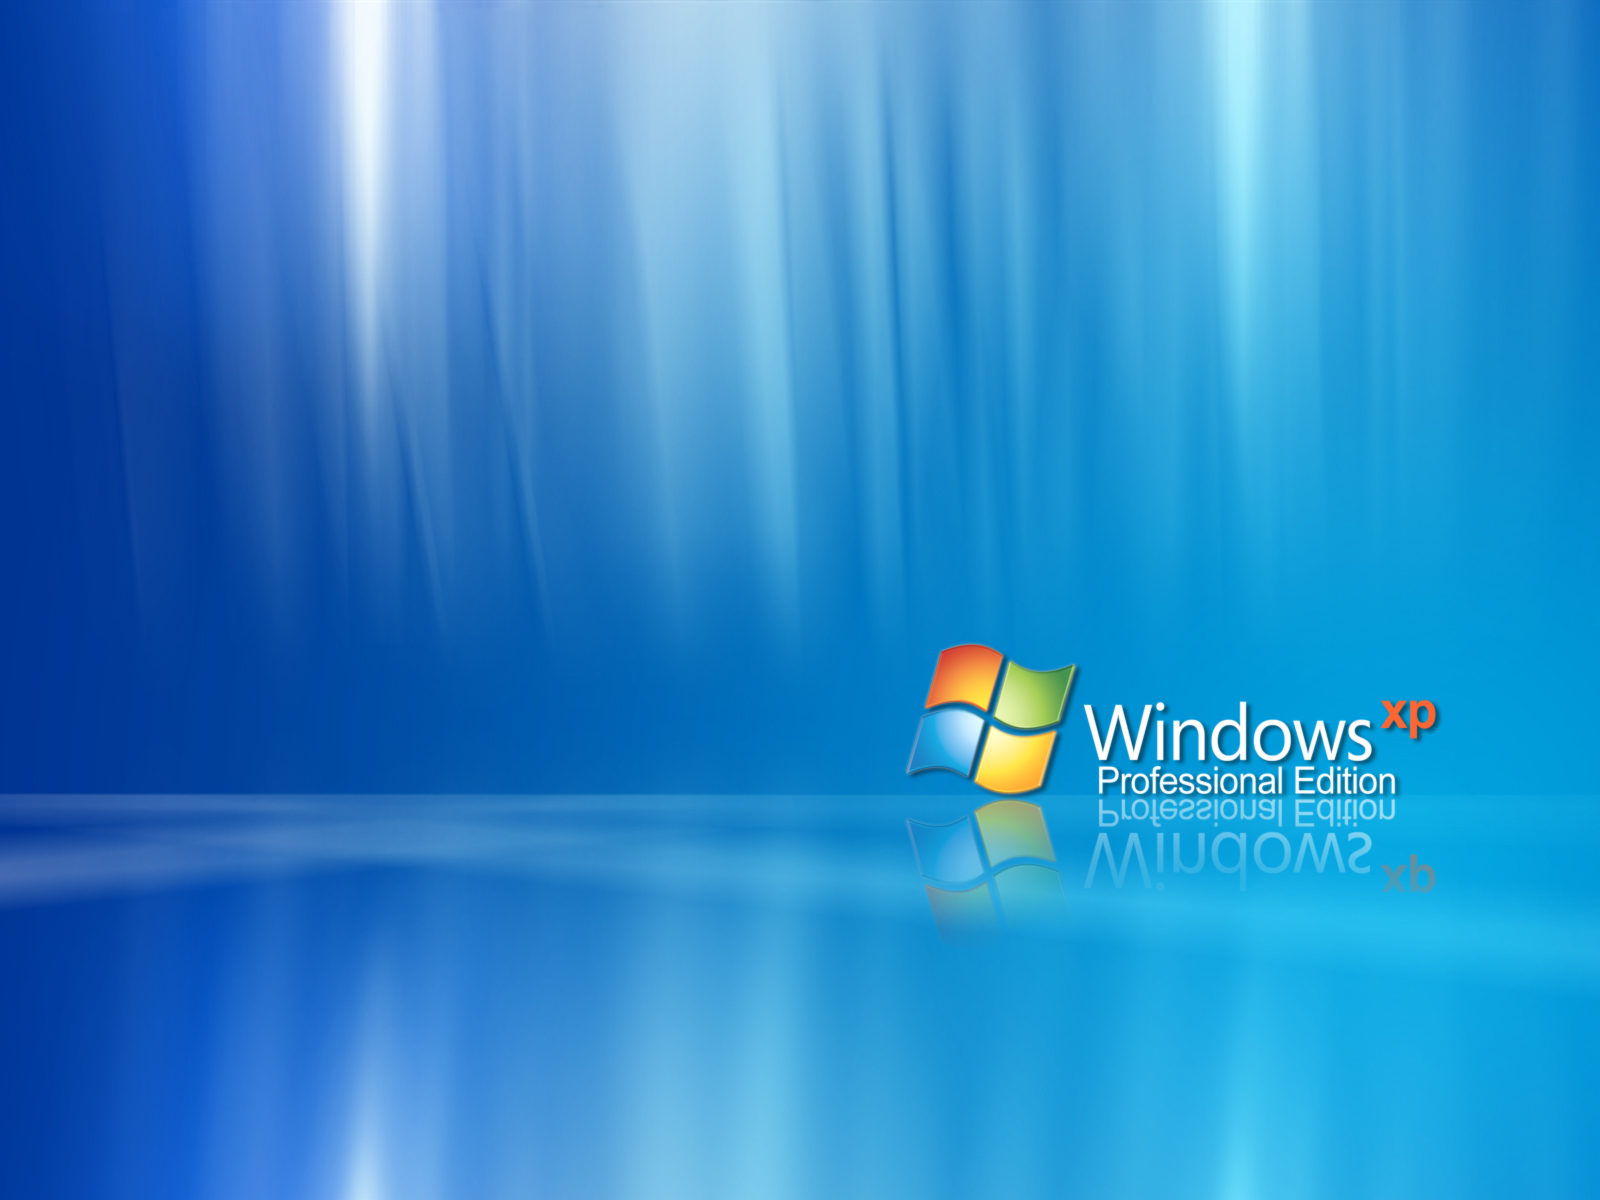 High Quality Windows XP HD Wallpapers5 - HD Wallpapers N